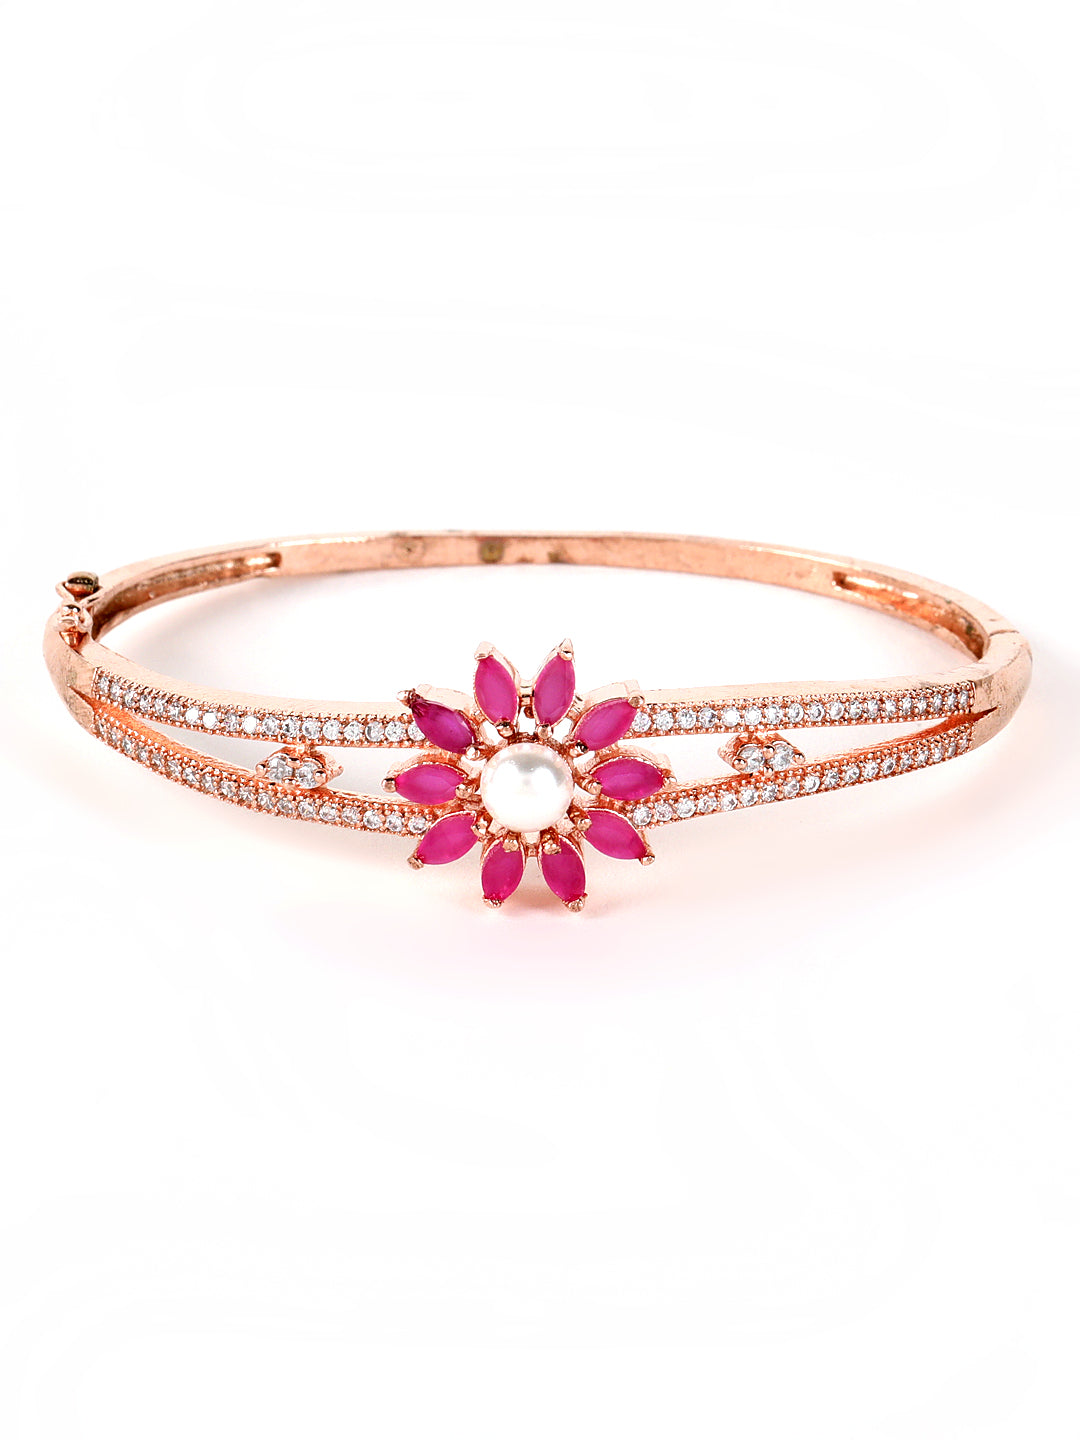 Rose Gold Plated American Diamond Ruby Studded Floral Patterned Bracelet - Jazzandsizzle